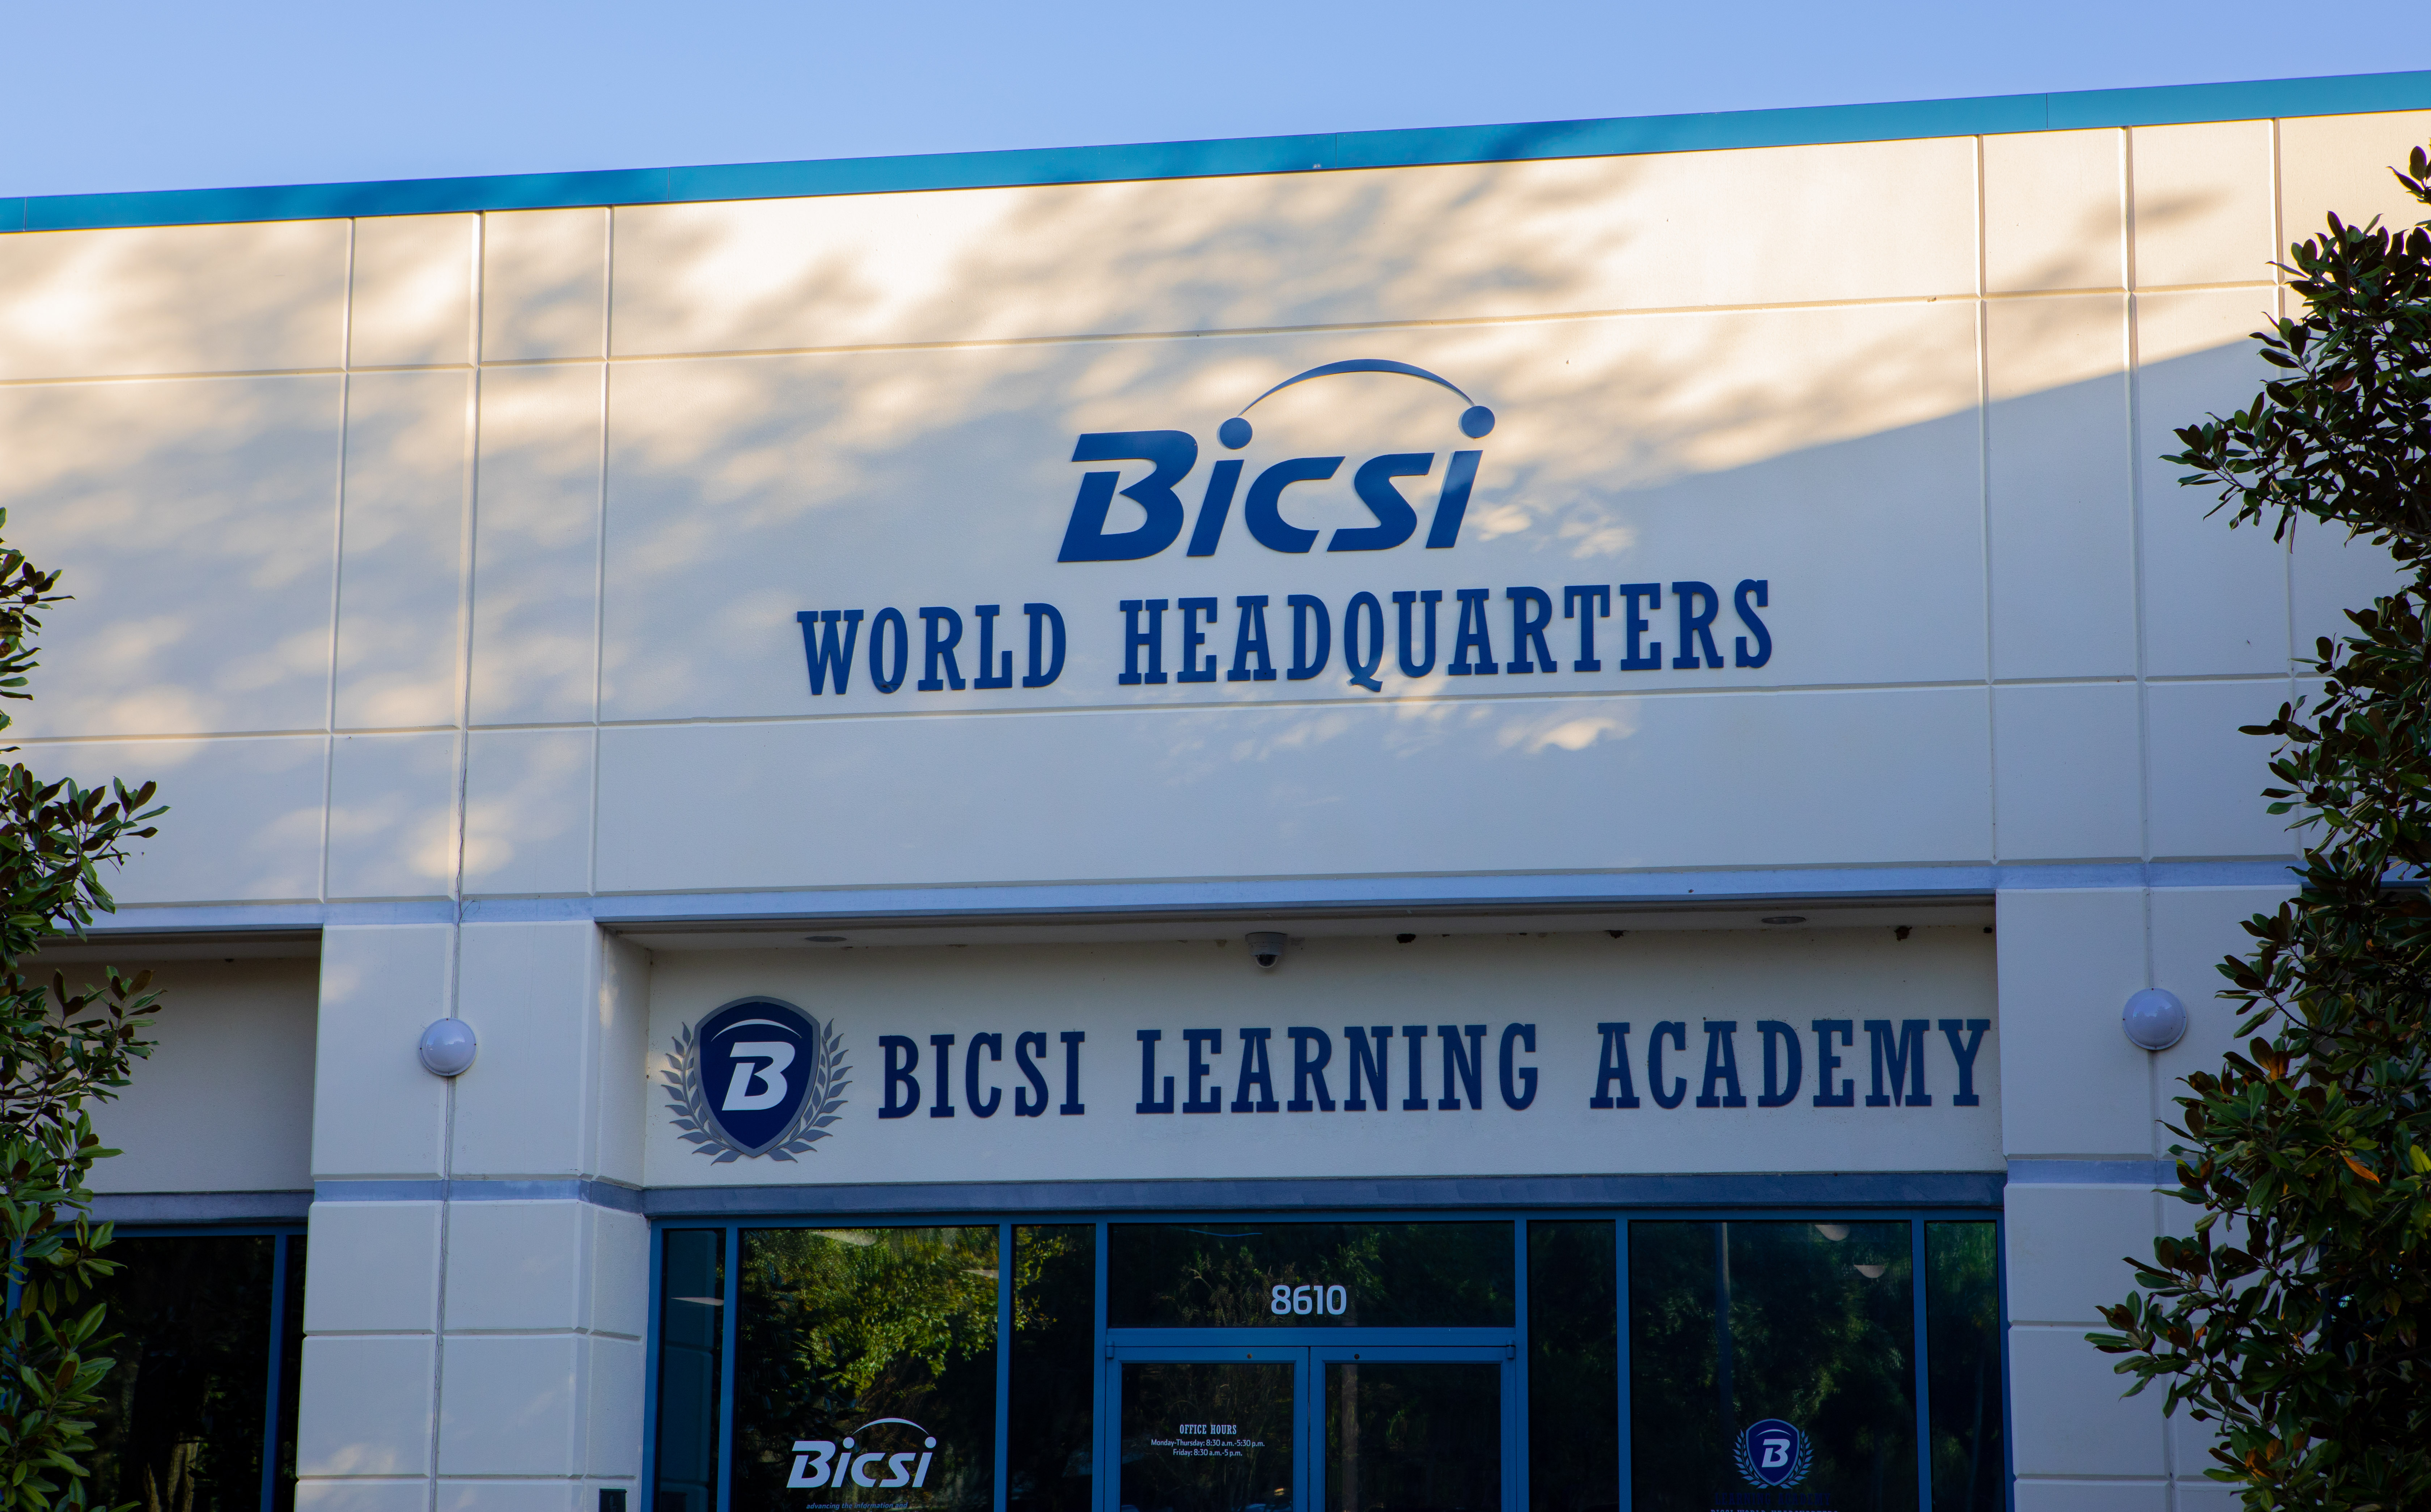 BICSI World Headquarter